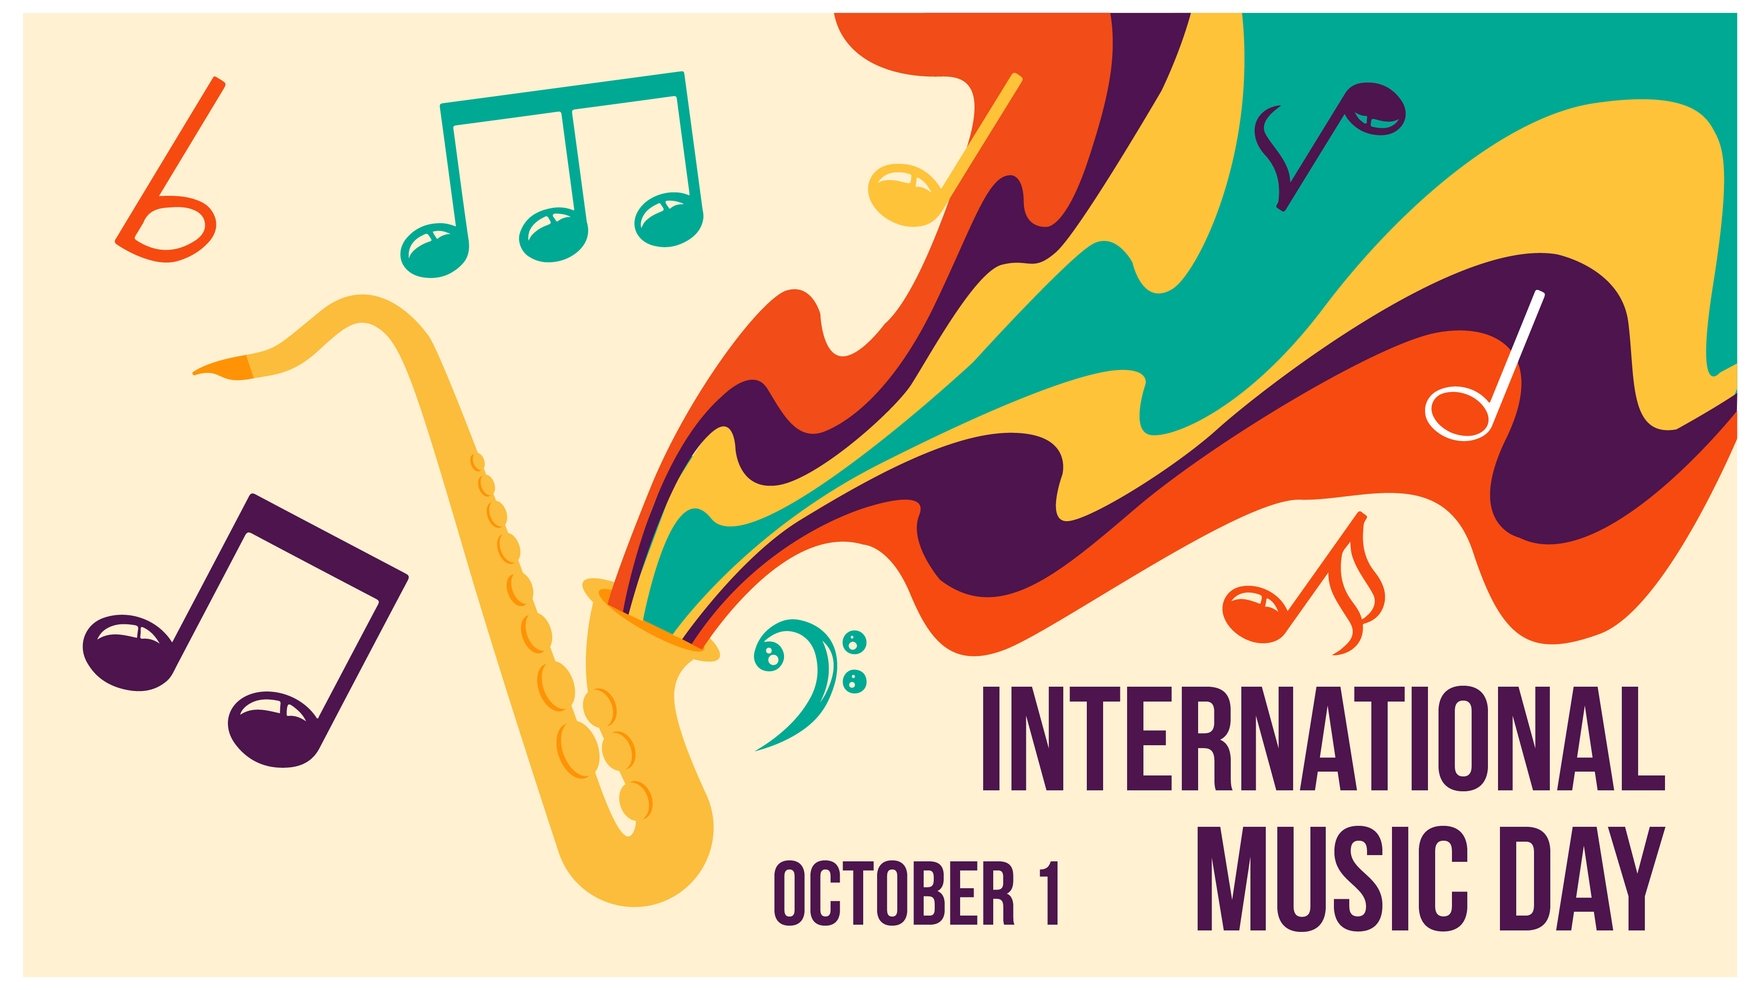 Free International Music Day Image Background in PDF, Illustrator, PSD, EPS, SVG, JPG, PNG